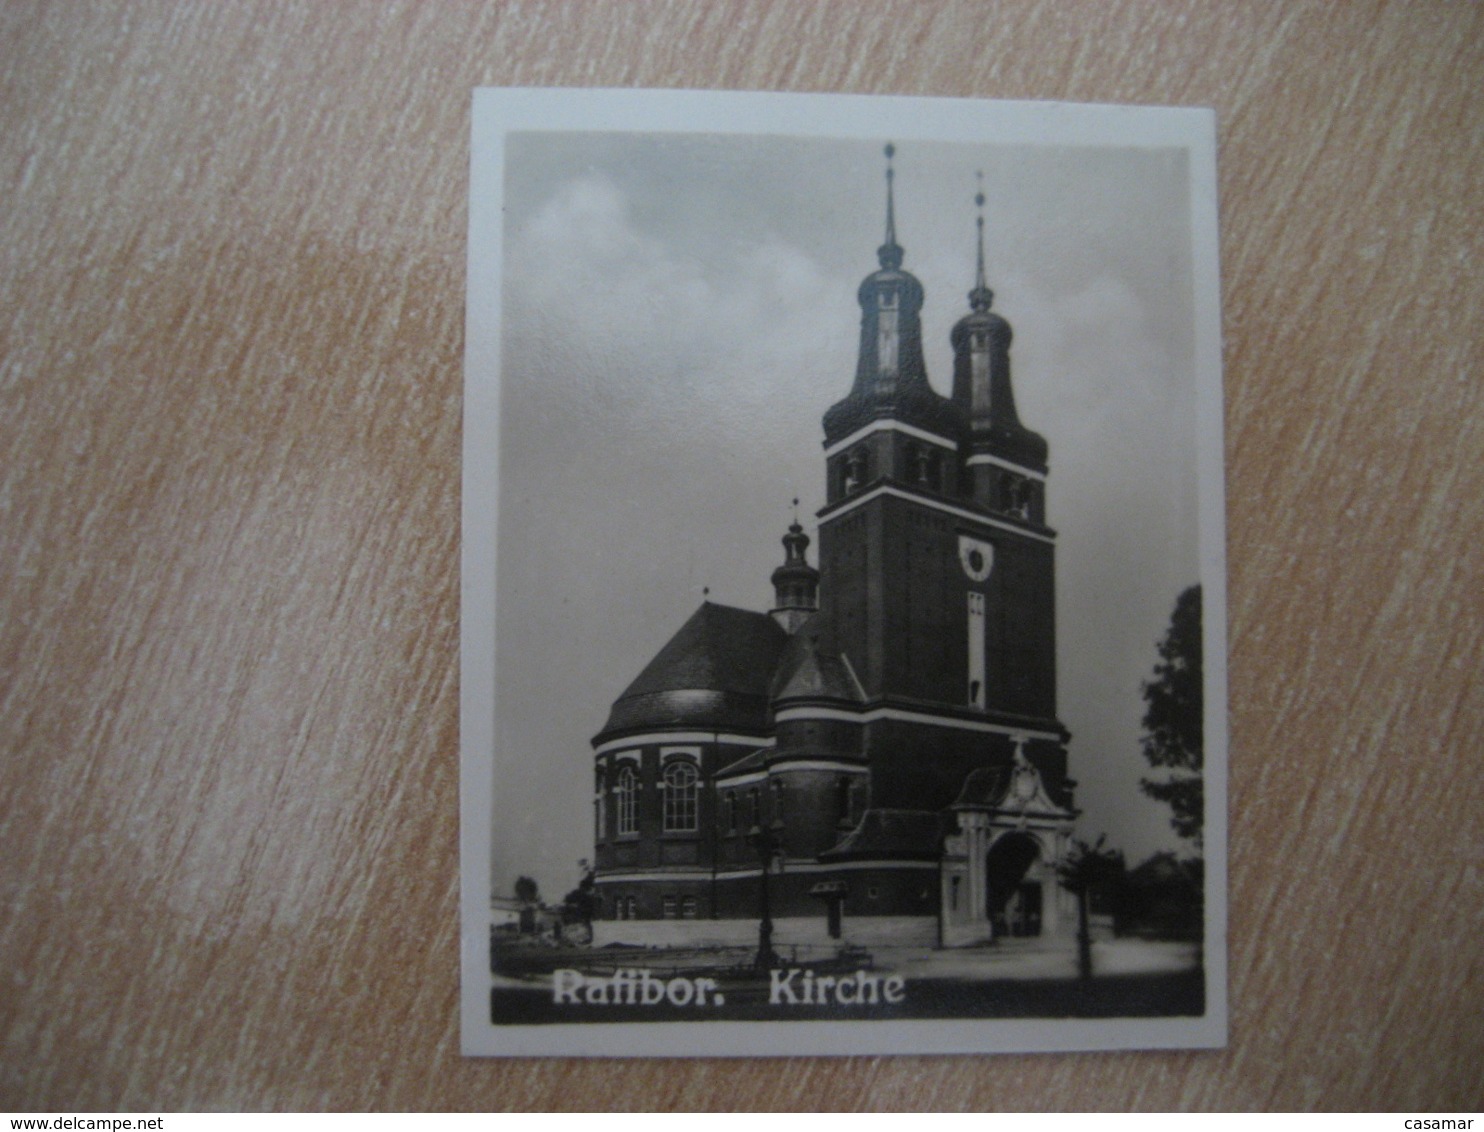 RATIBOR Kirche Church Bilder Card Photo Photography (4x5,2 Cm) Schlesien Silesia Poland Czech GERMANY 30s Tobacco - Non Classés